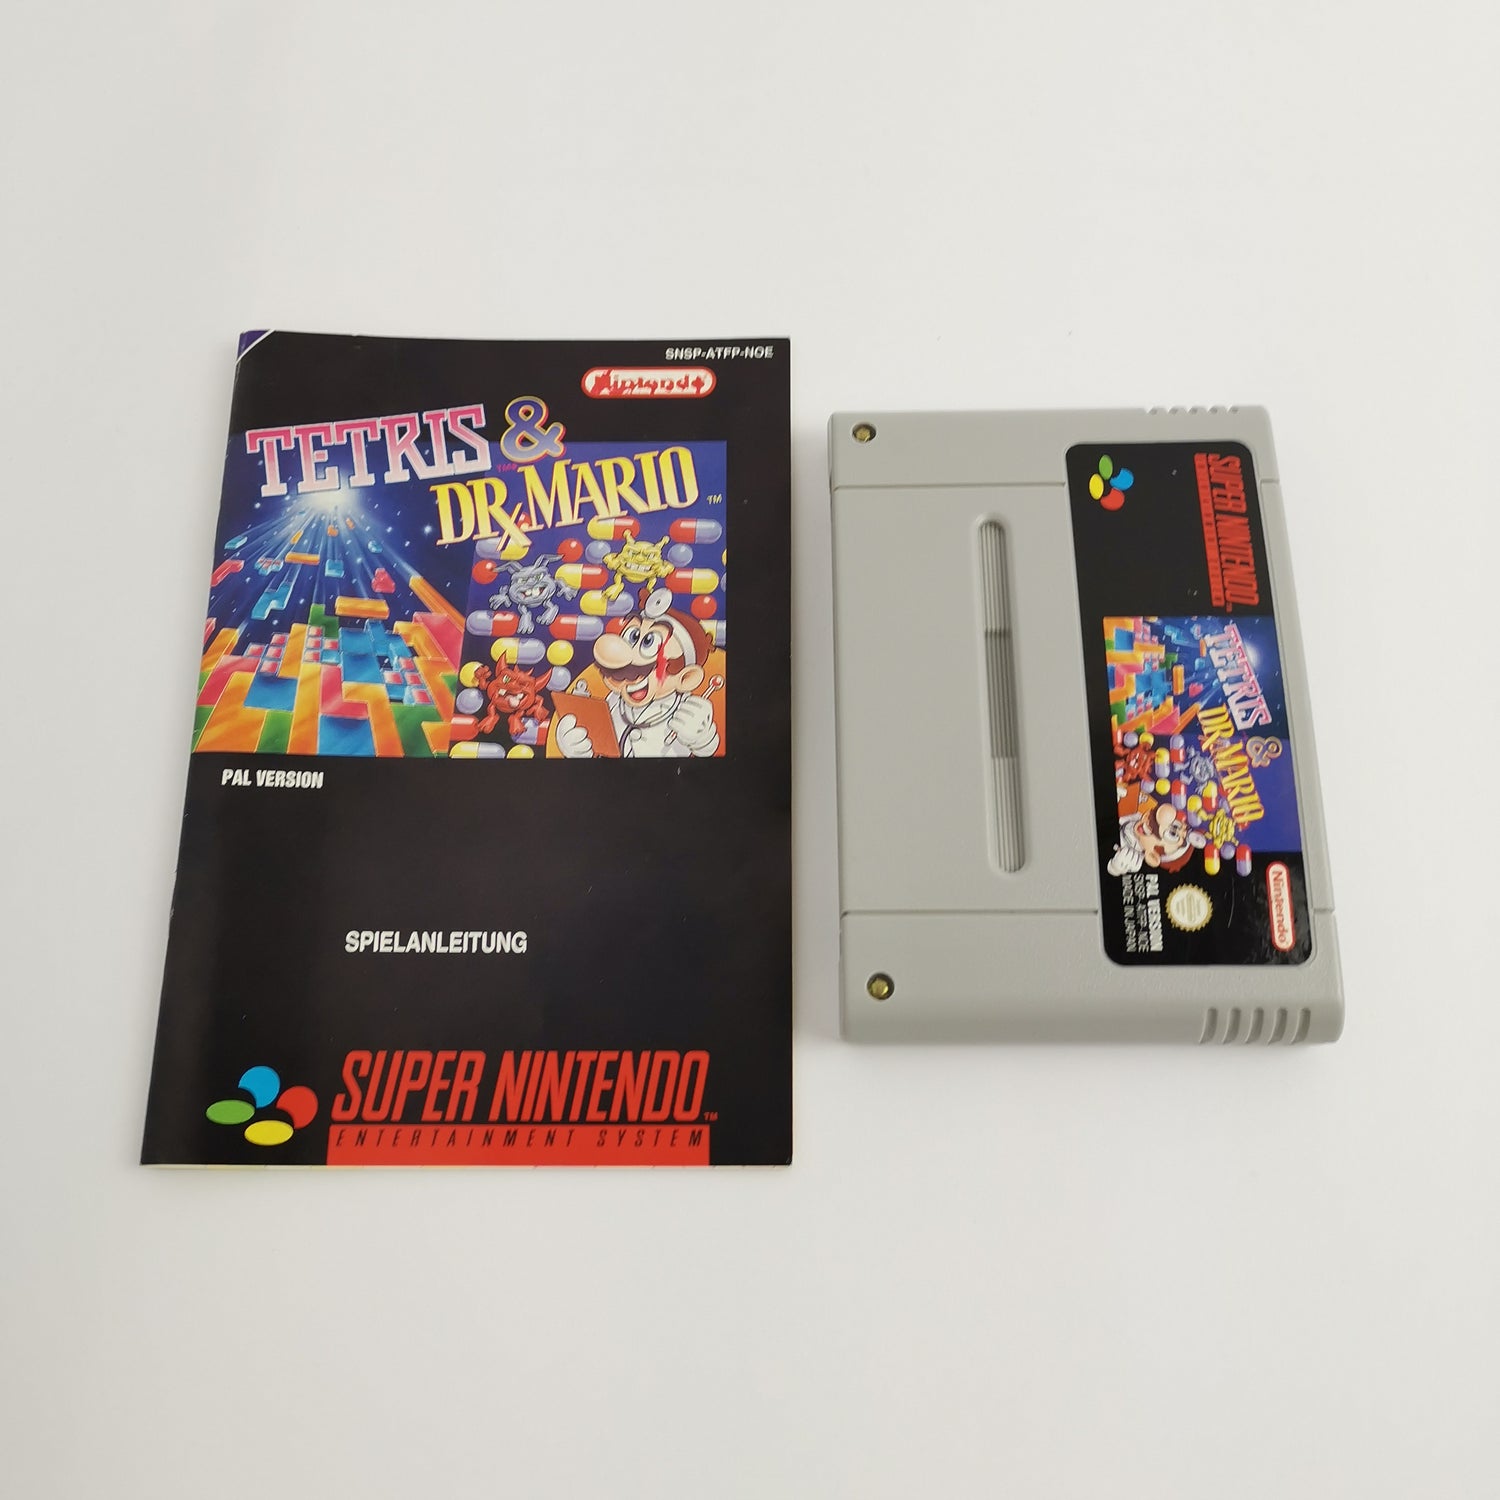 Super Nintendo Game: Tetris & Dr. Mario | SNES Game - OVP PAL version